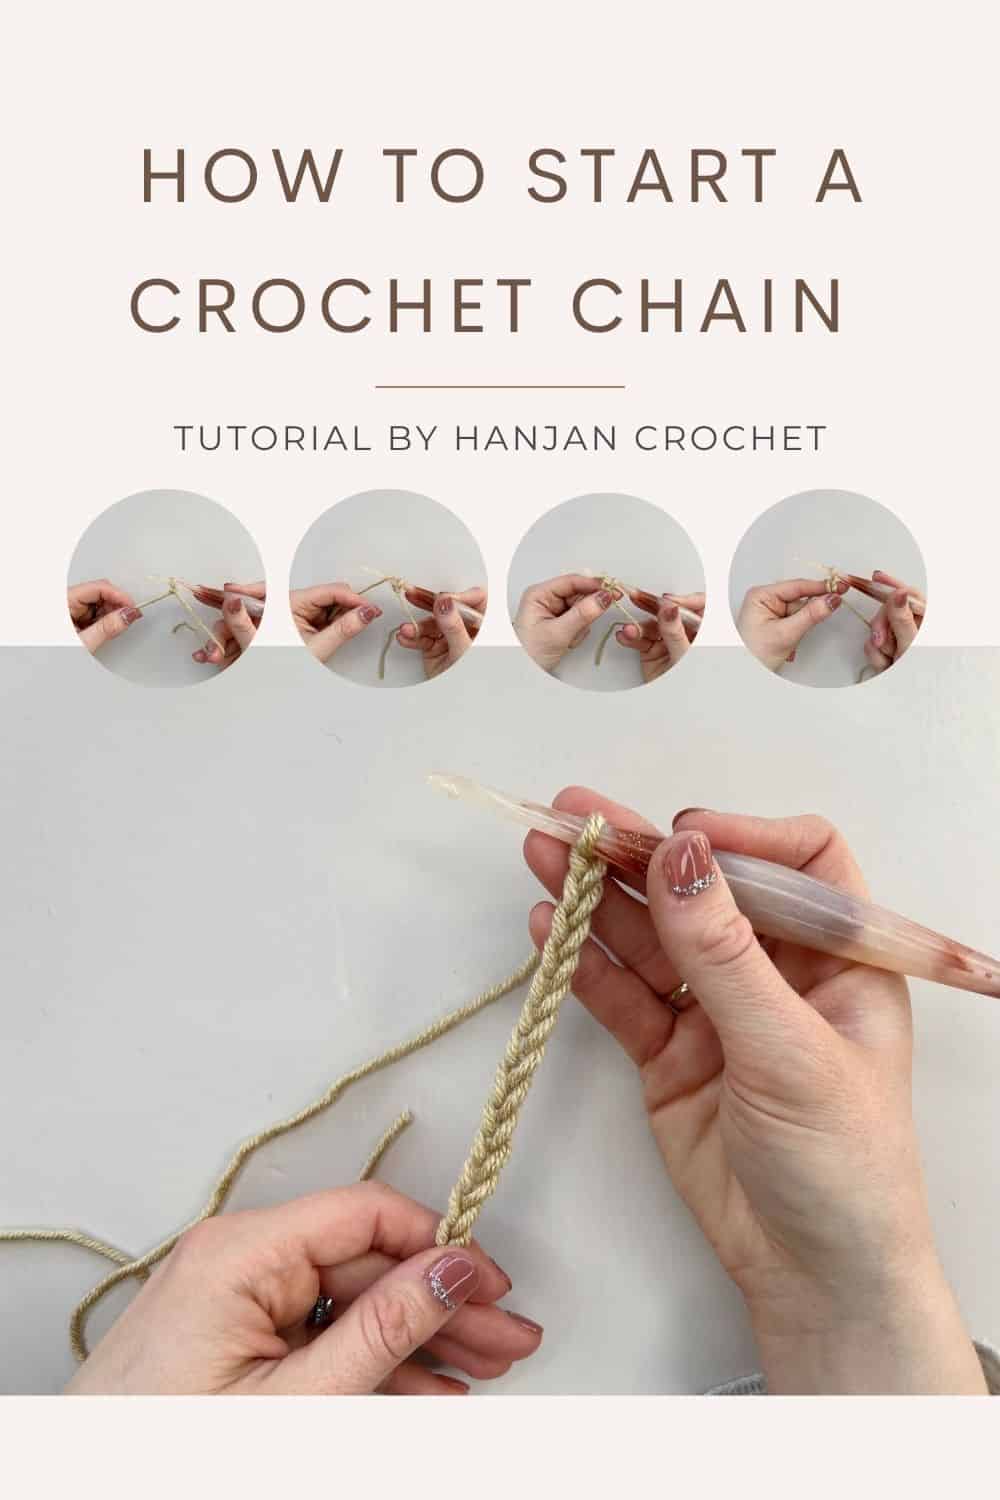 How to start a crochet chain tutorial pin image by HanJan Crochet.